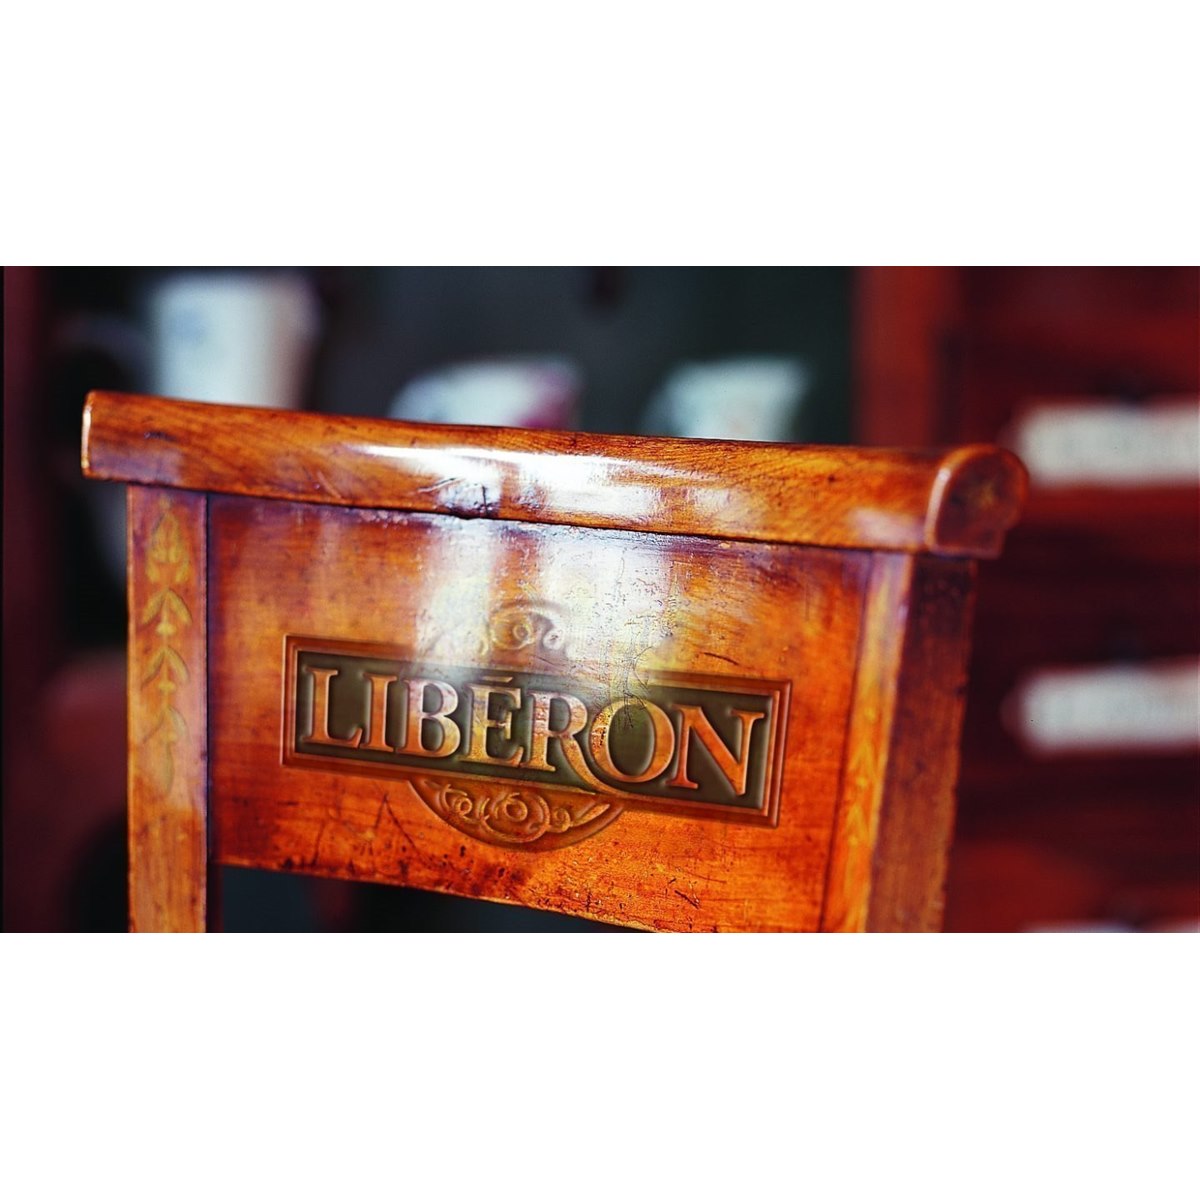 Where to buy Liberon Spirit Wood Dye